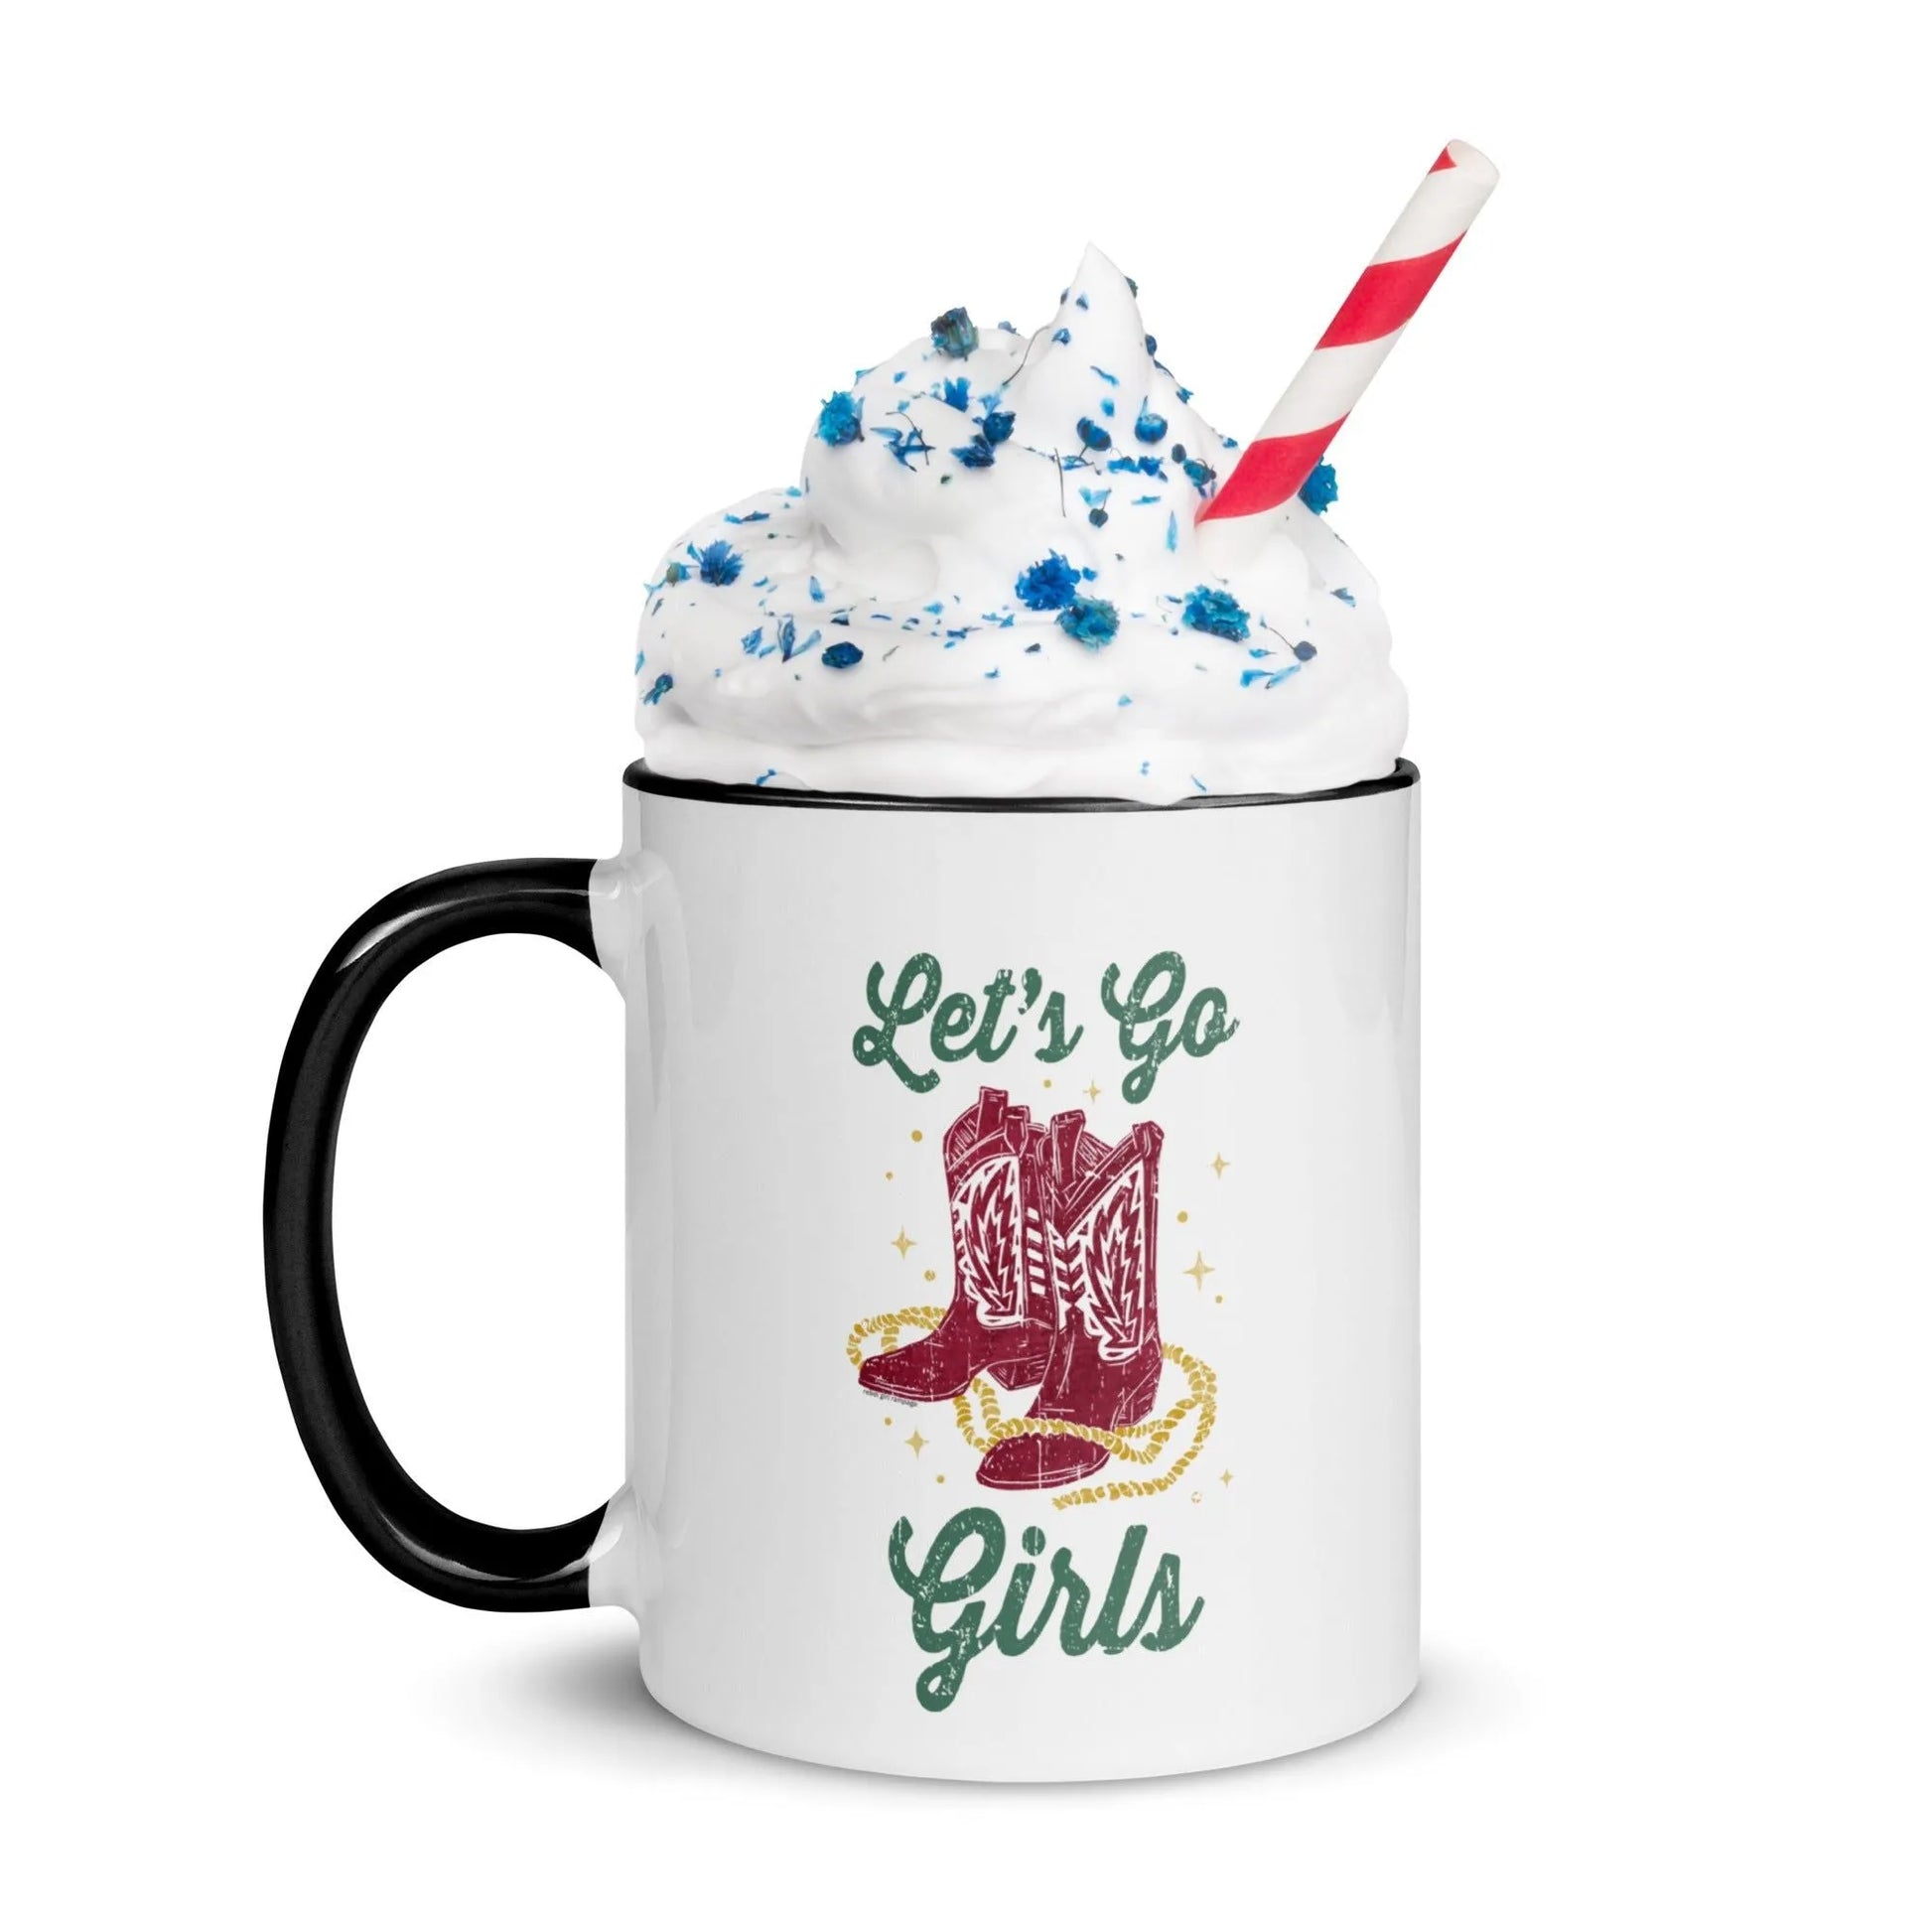 Let’s Go Girls women empowerment Nashville feminist texas cowgirl Ceramic Coffee Mug Rebel Girl Rampage